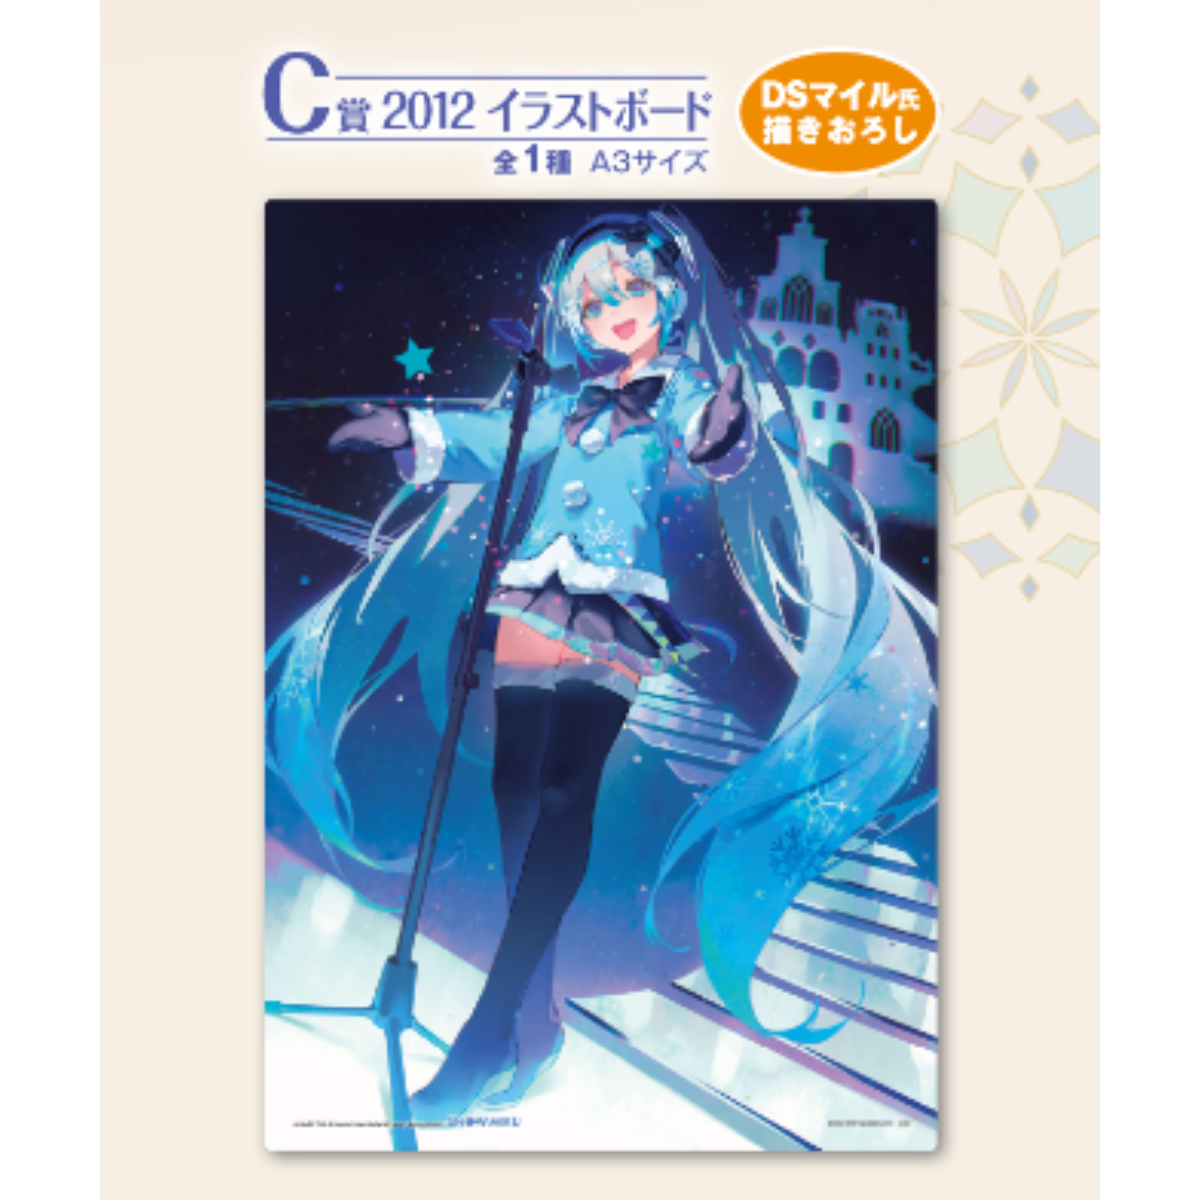 Ichiban Kuji Snow Miku Second Season-Bandai-Ace Cards &amp; Collectibles